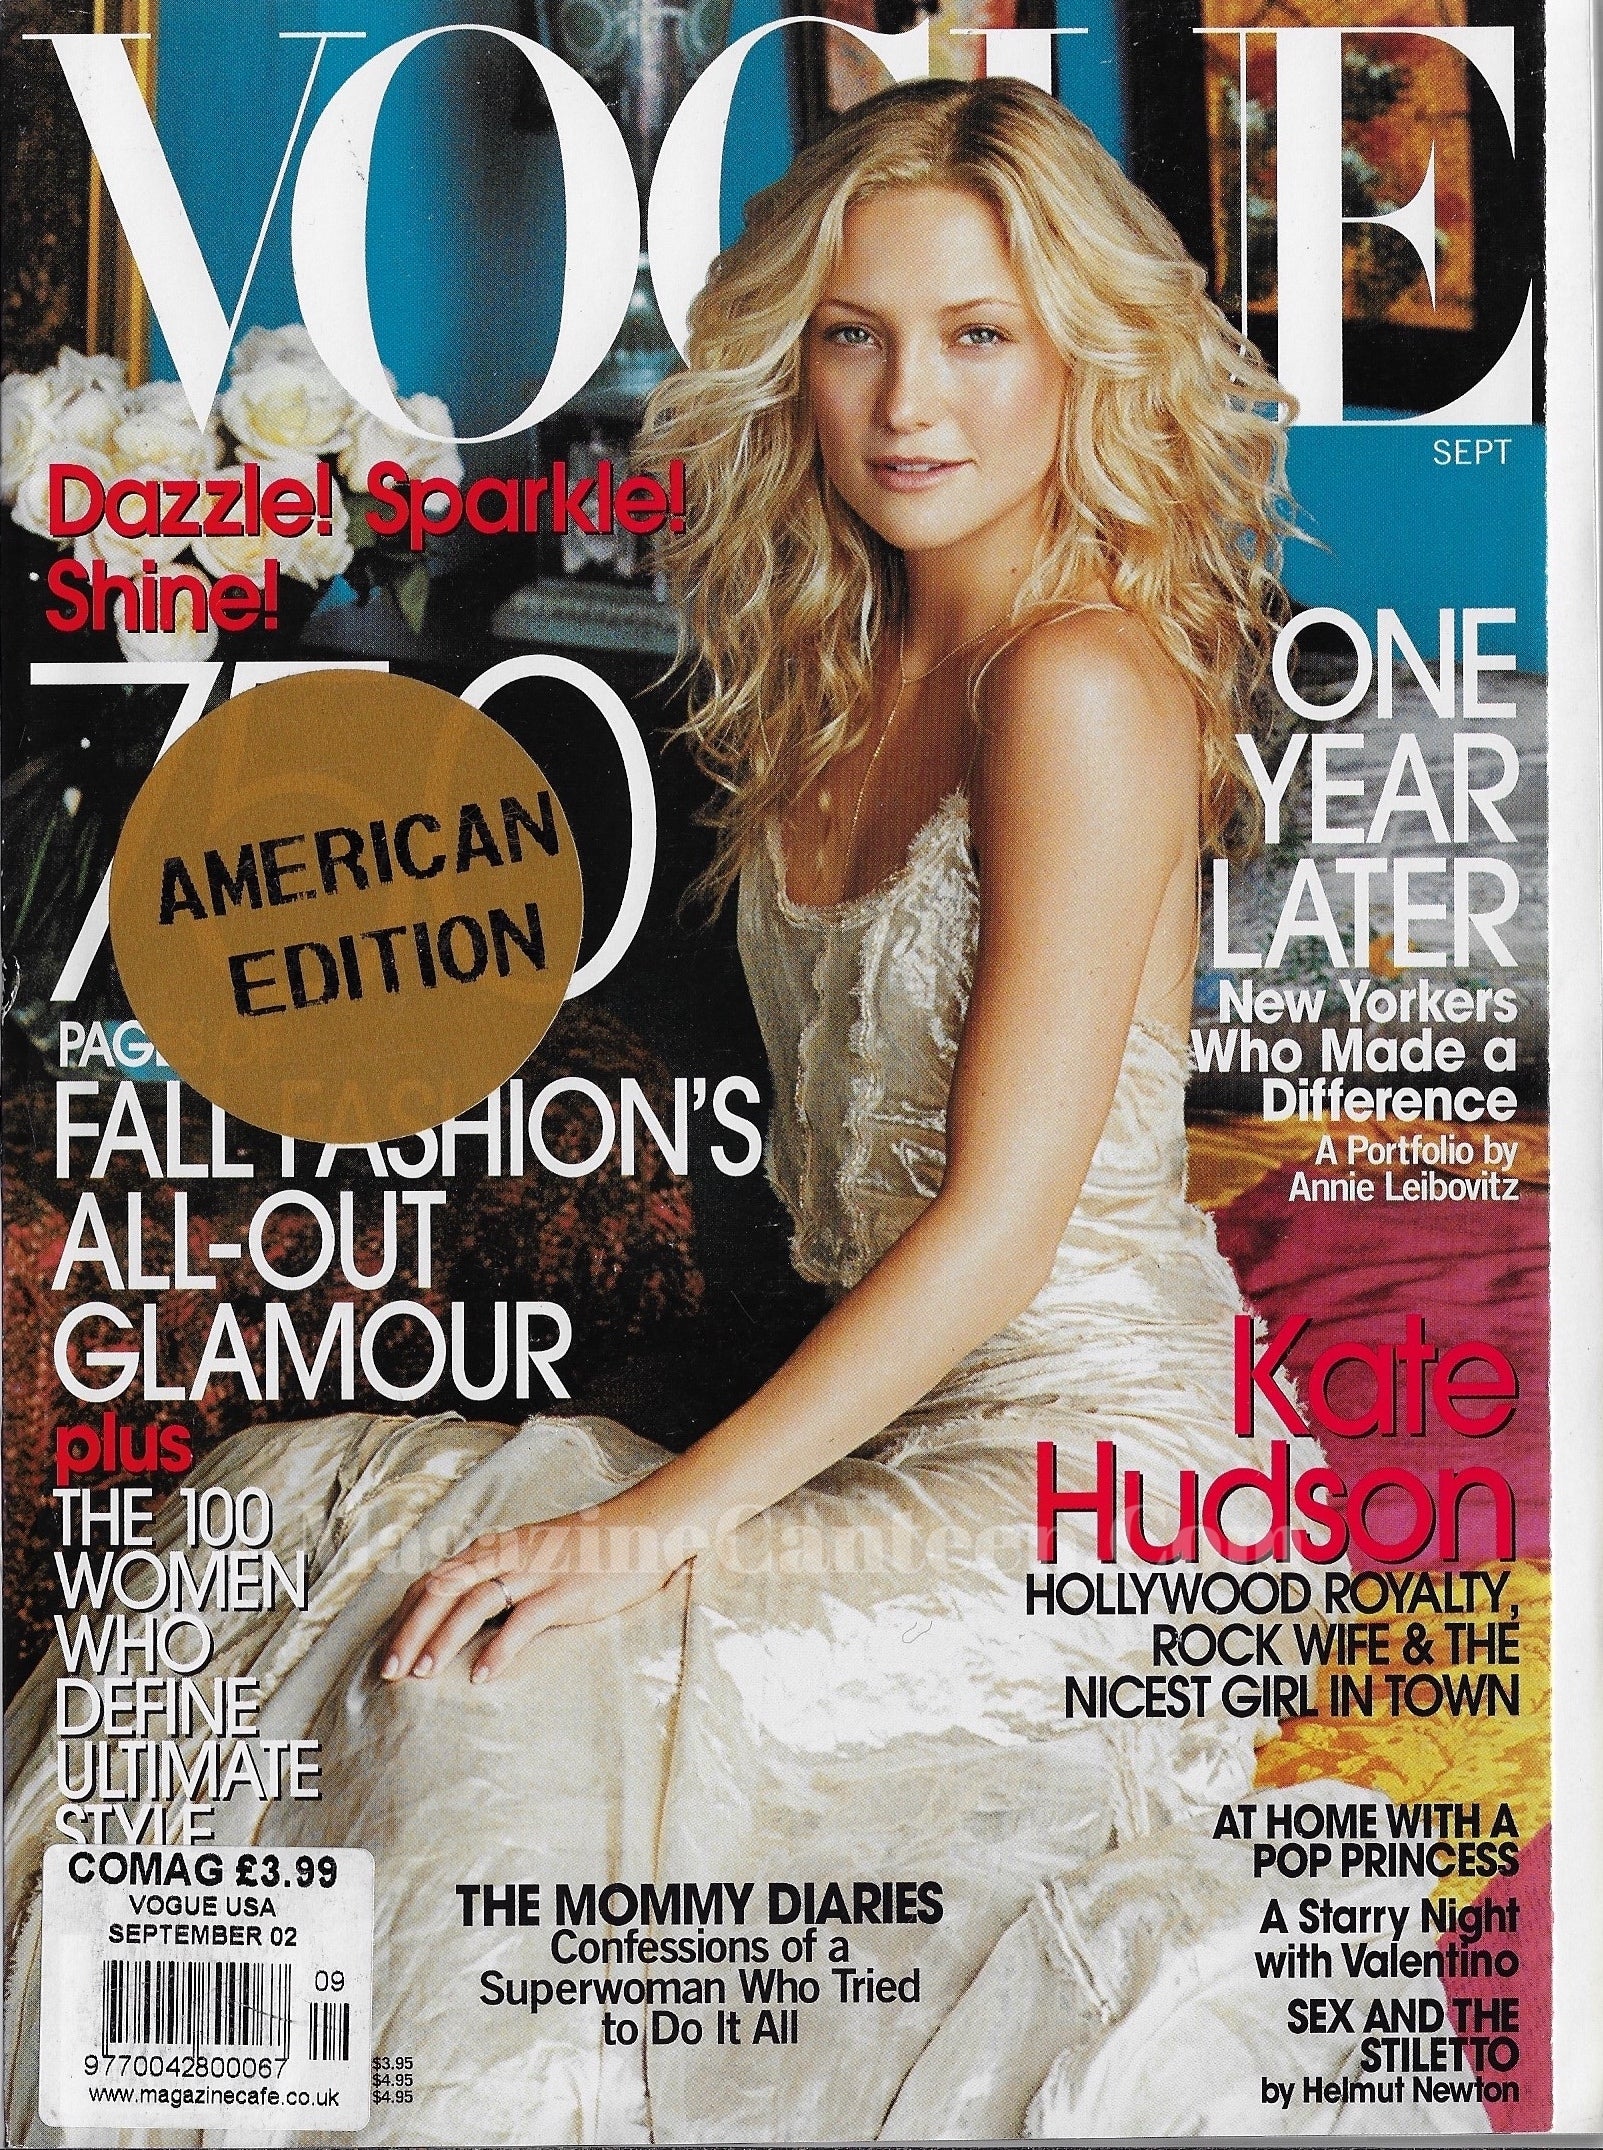 Vogue USA Magazine September 2002 - Kate Hudson